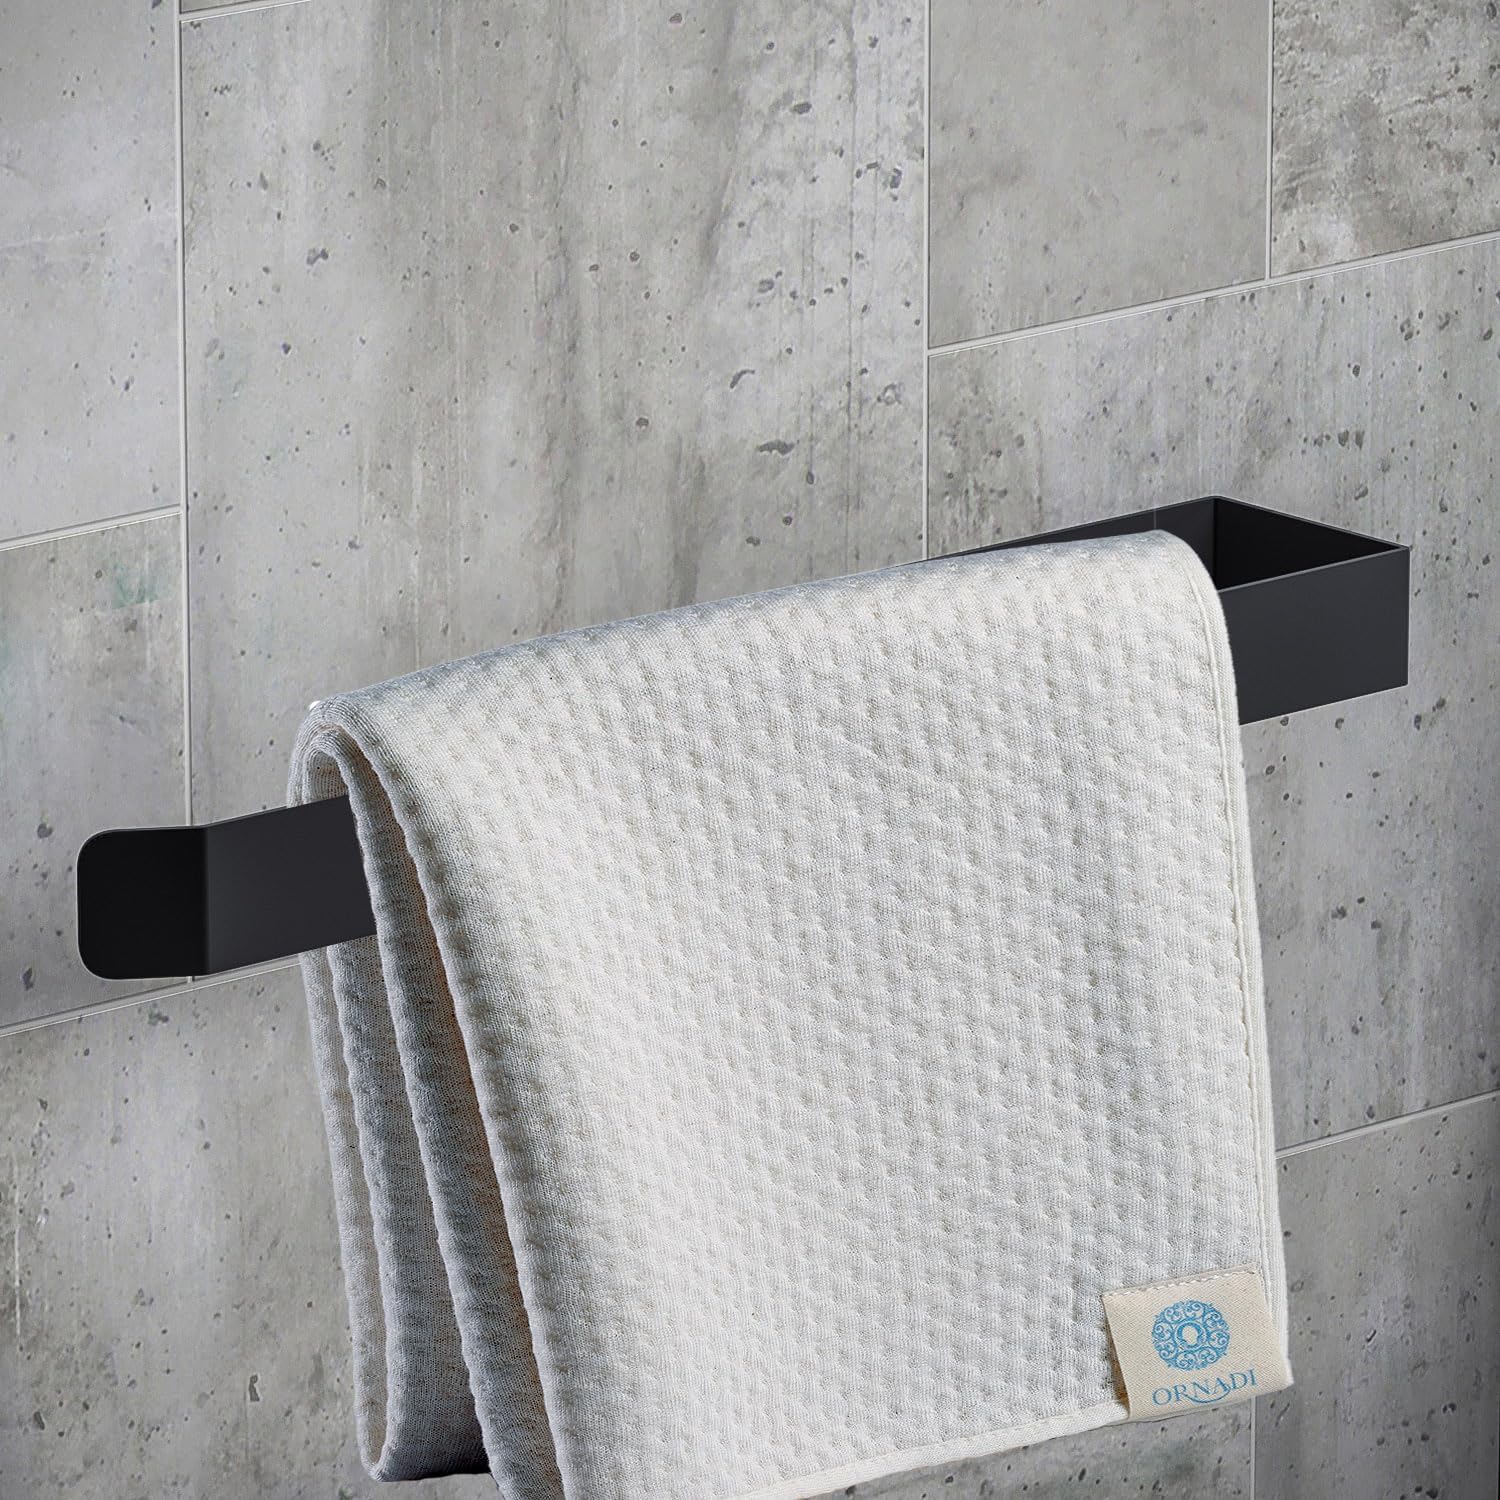 Hand Towel Holder - Self Adhesive Stainless Steel Towel Rack (20 cm/8 inch)